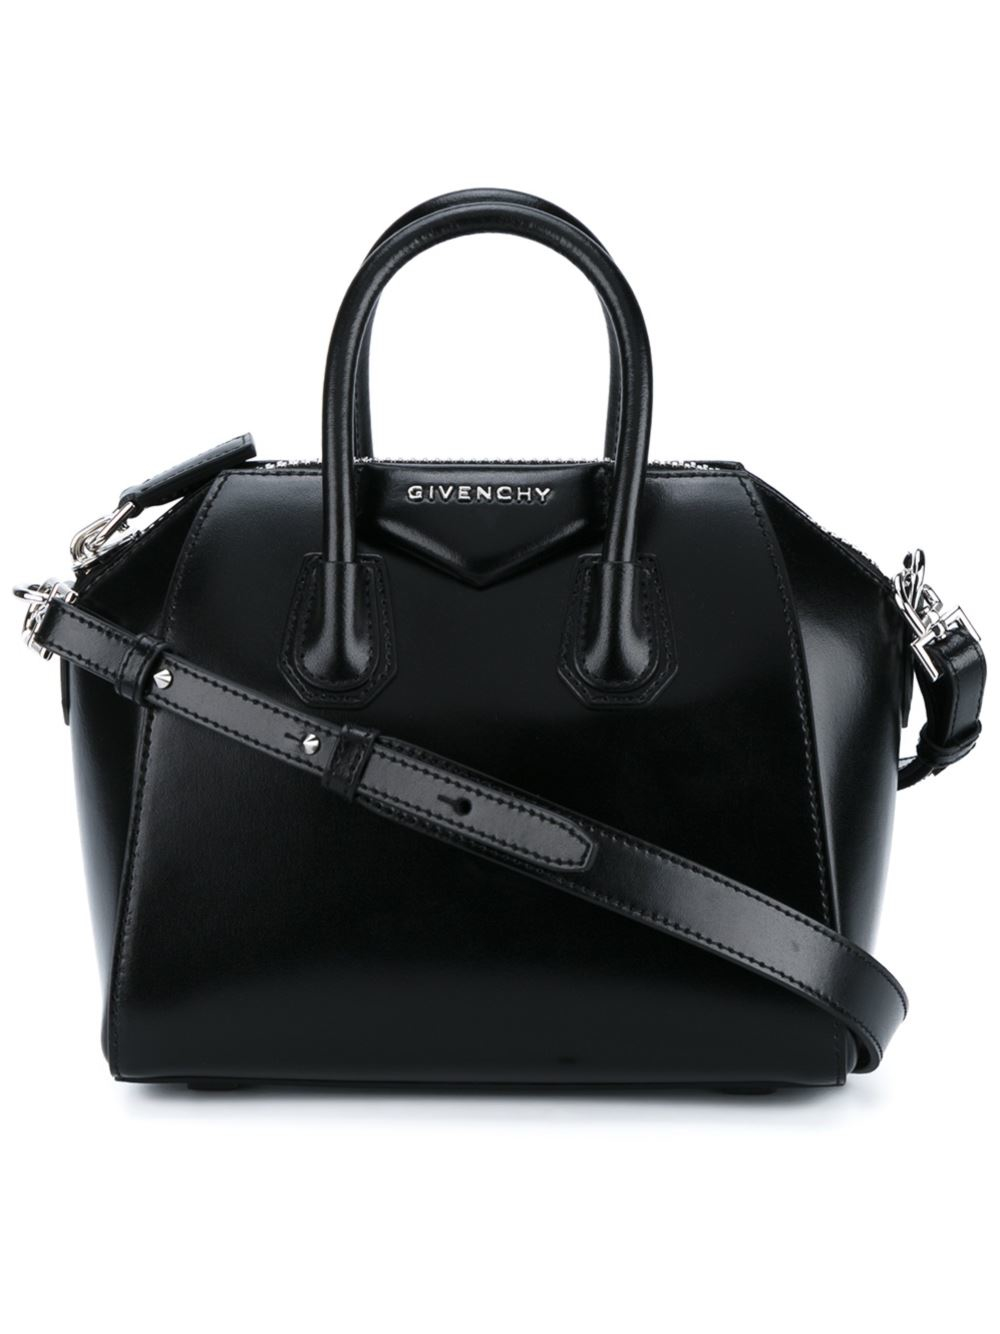 Givenchy Mini Antigona Handbag in Black - Save 3% | Lyst